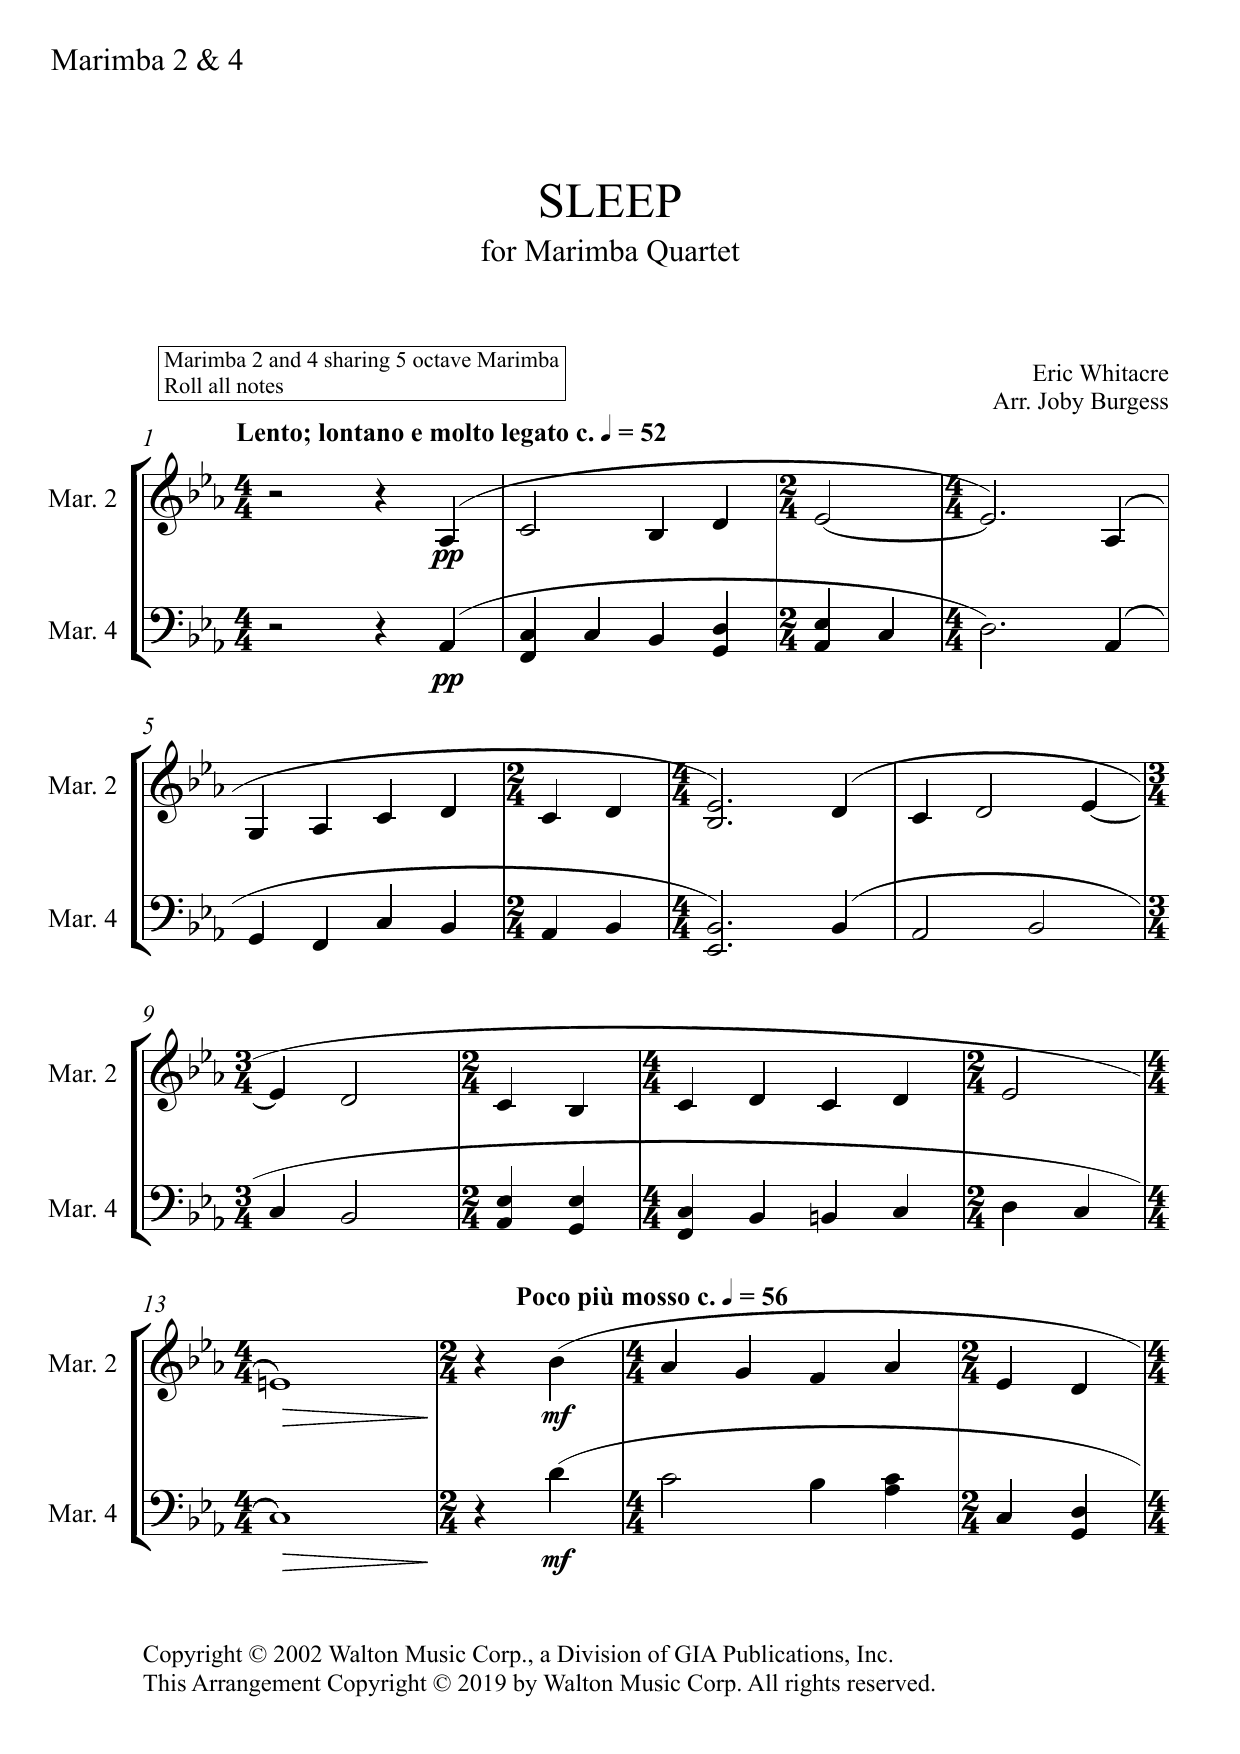 Eric Whitacre Sleep for Marimba Quartet (arr. Joby Burgess) - MARIMBA 2 & 4 Sheet Music Notes & Chords for Percussion Ensemble - Download or Print PDF